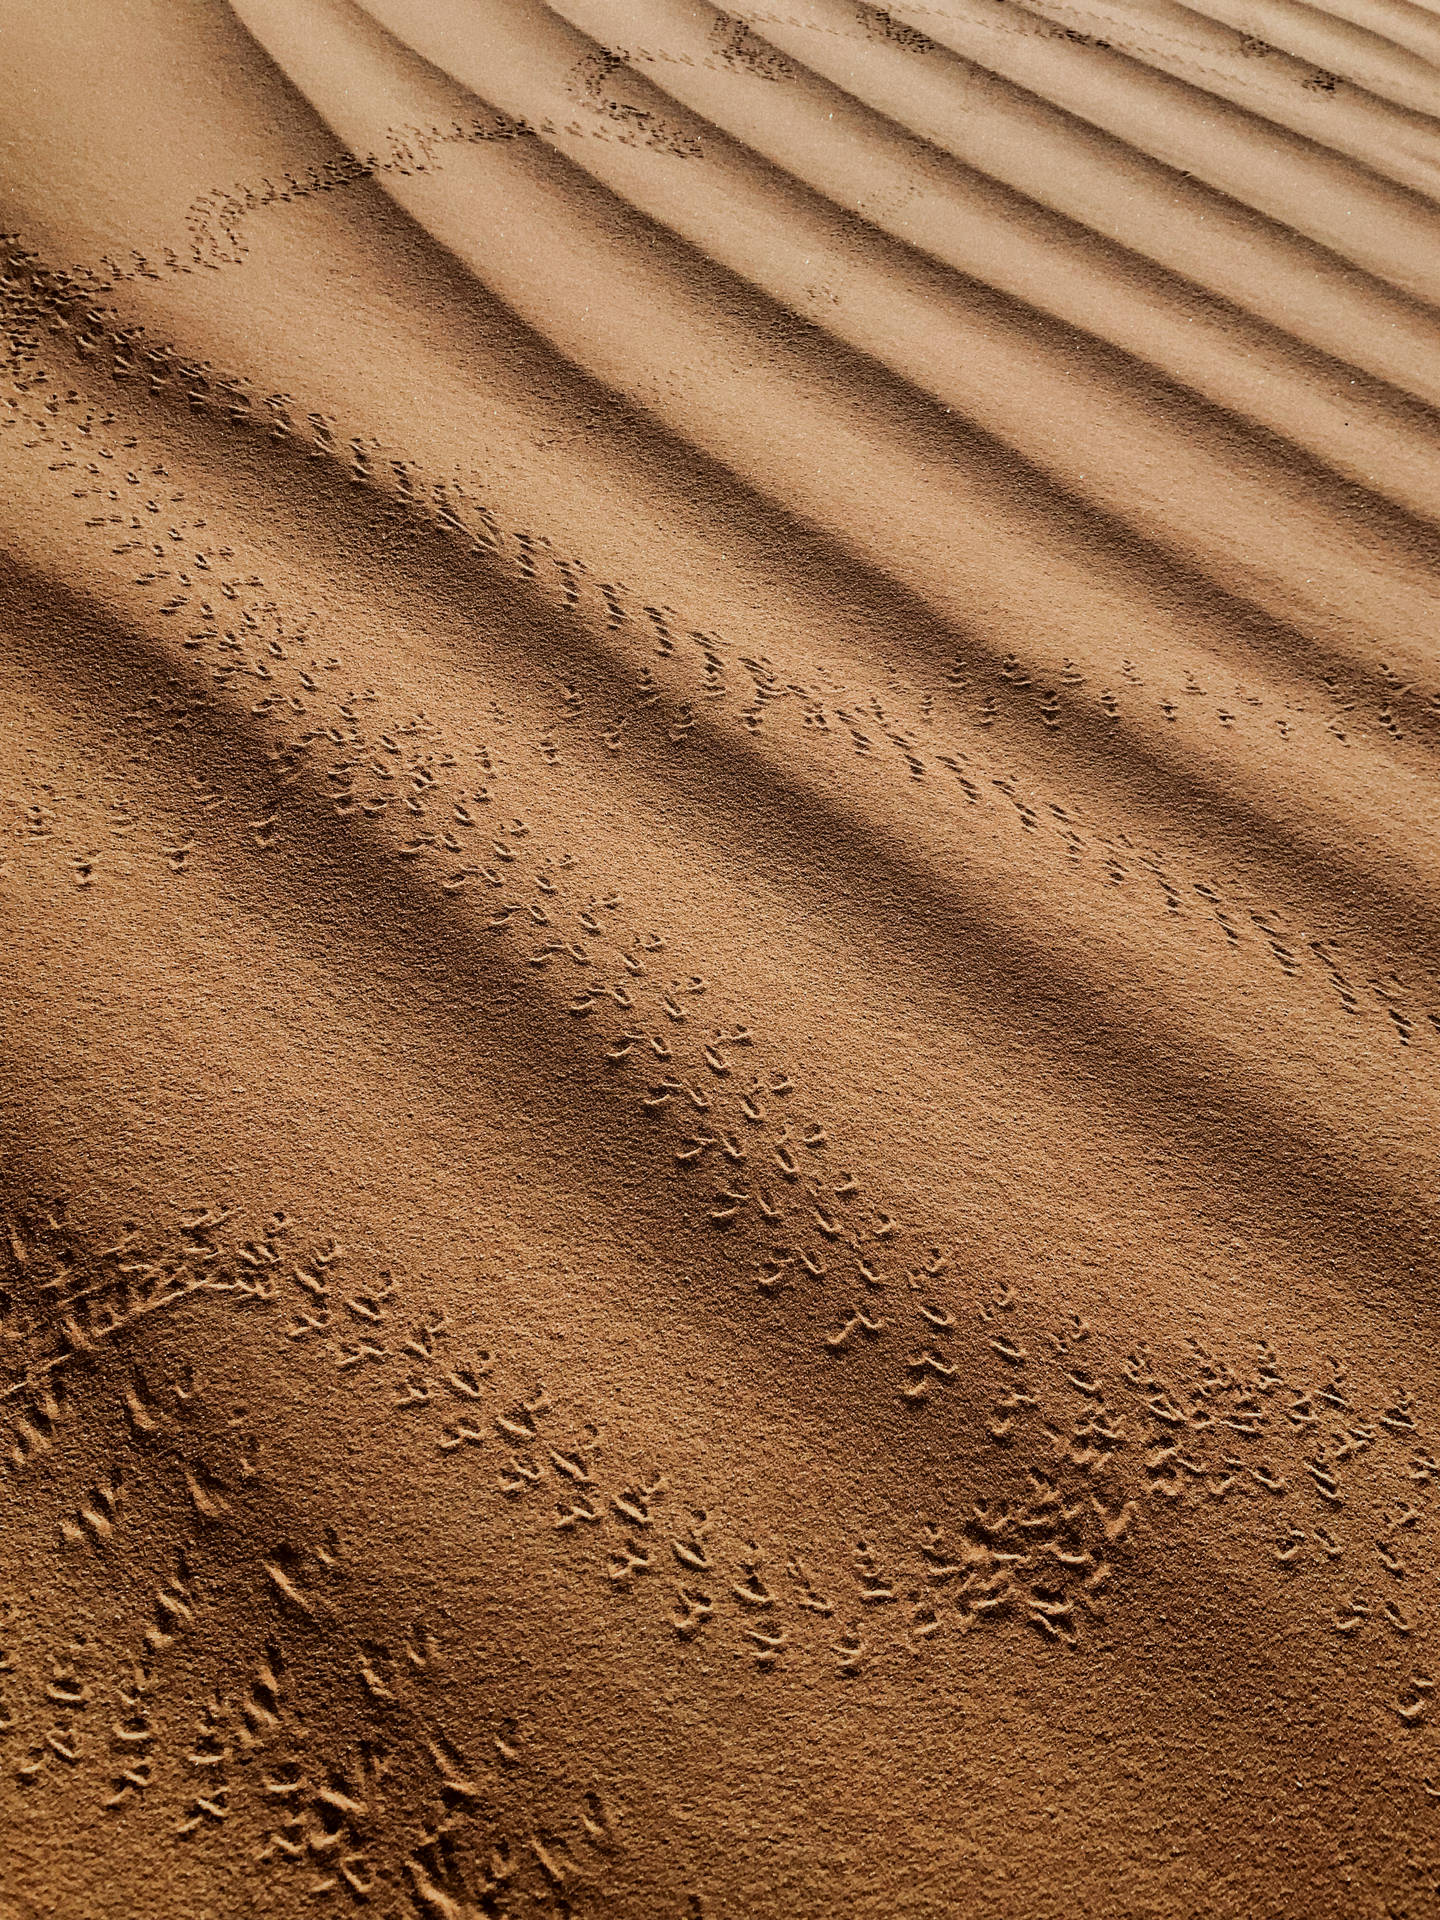 Wellenim Sand In Der Sahara Wallpaper